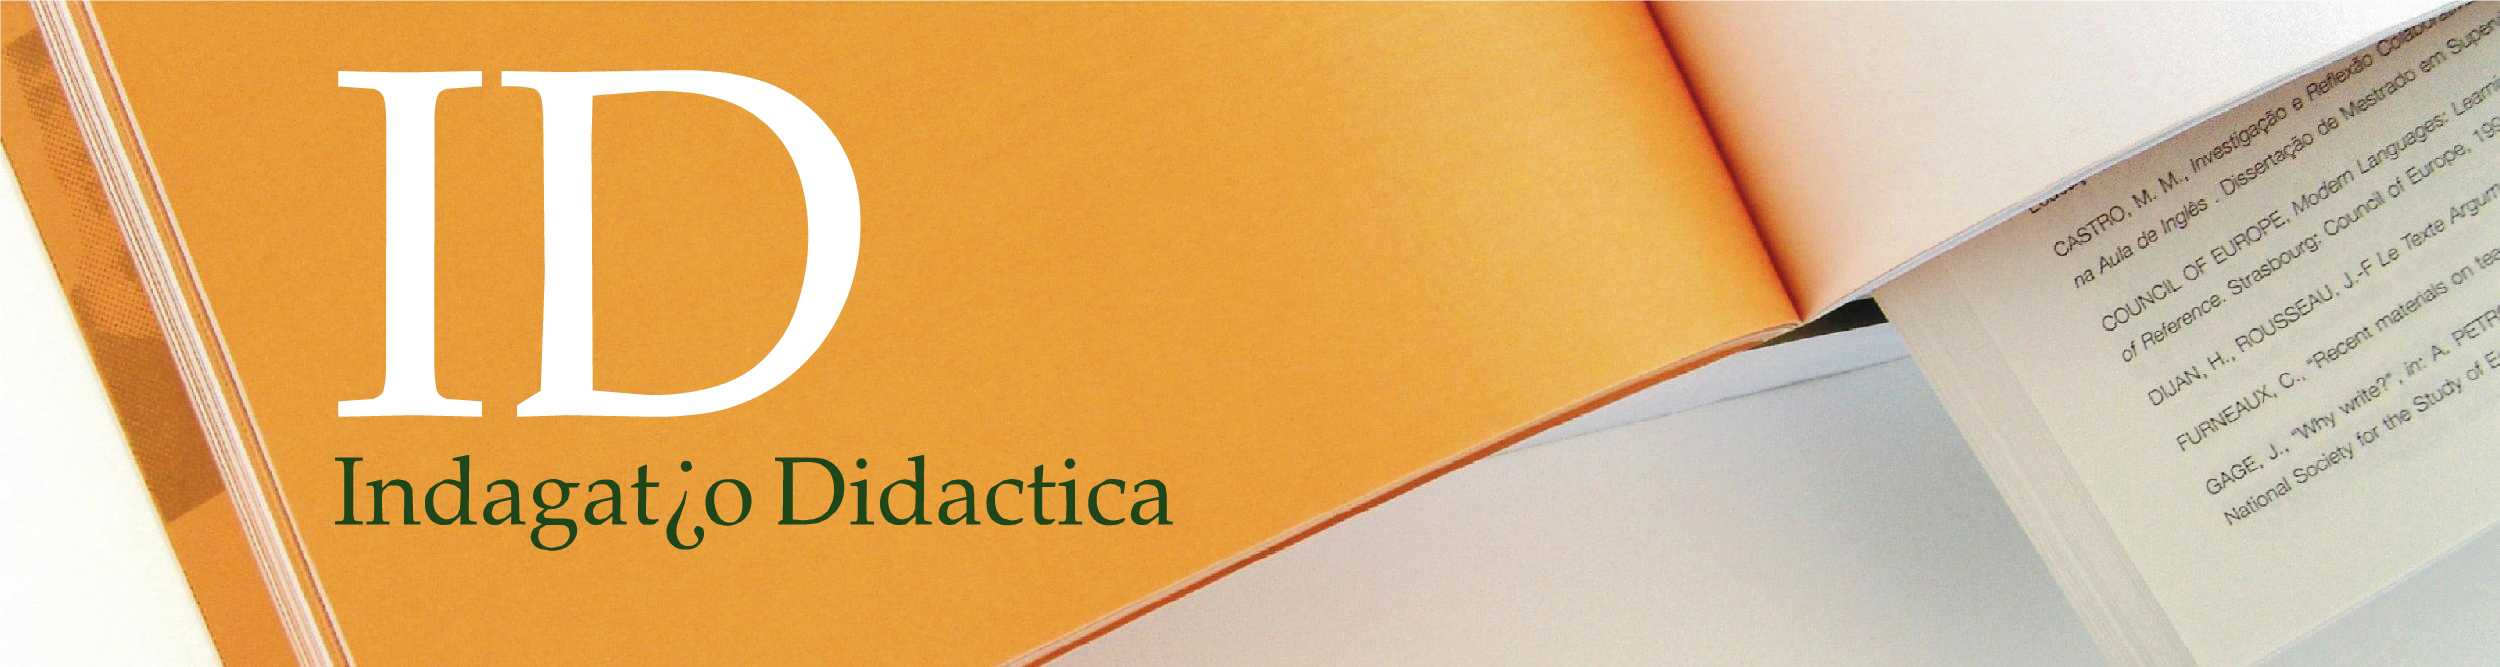 Logotipo da revista Indagatio Didactica